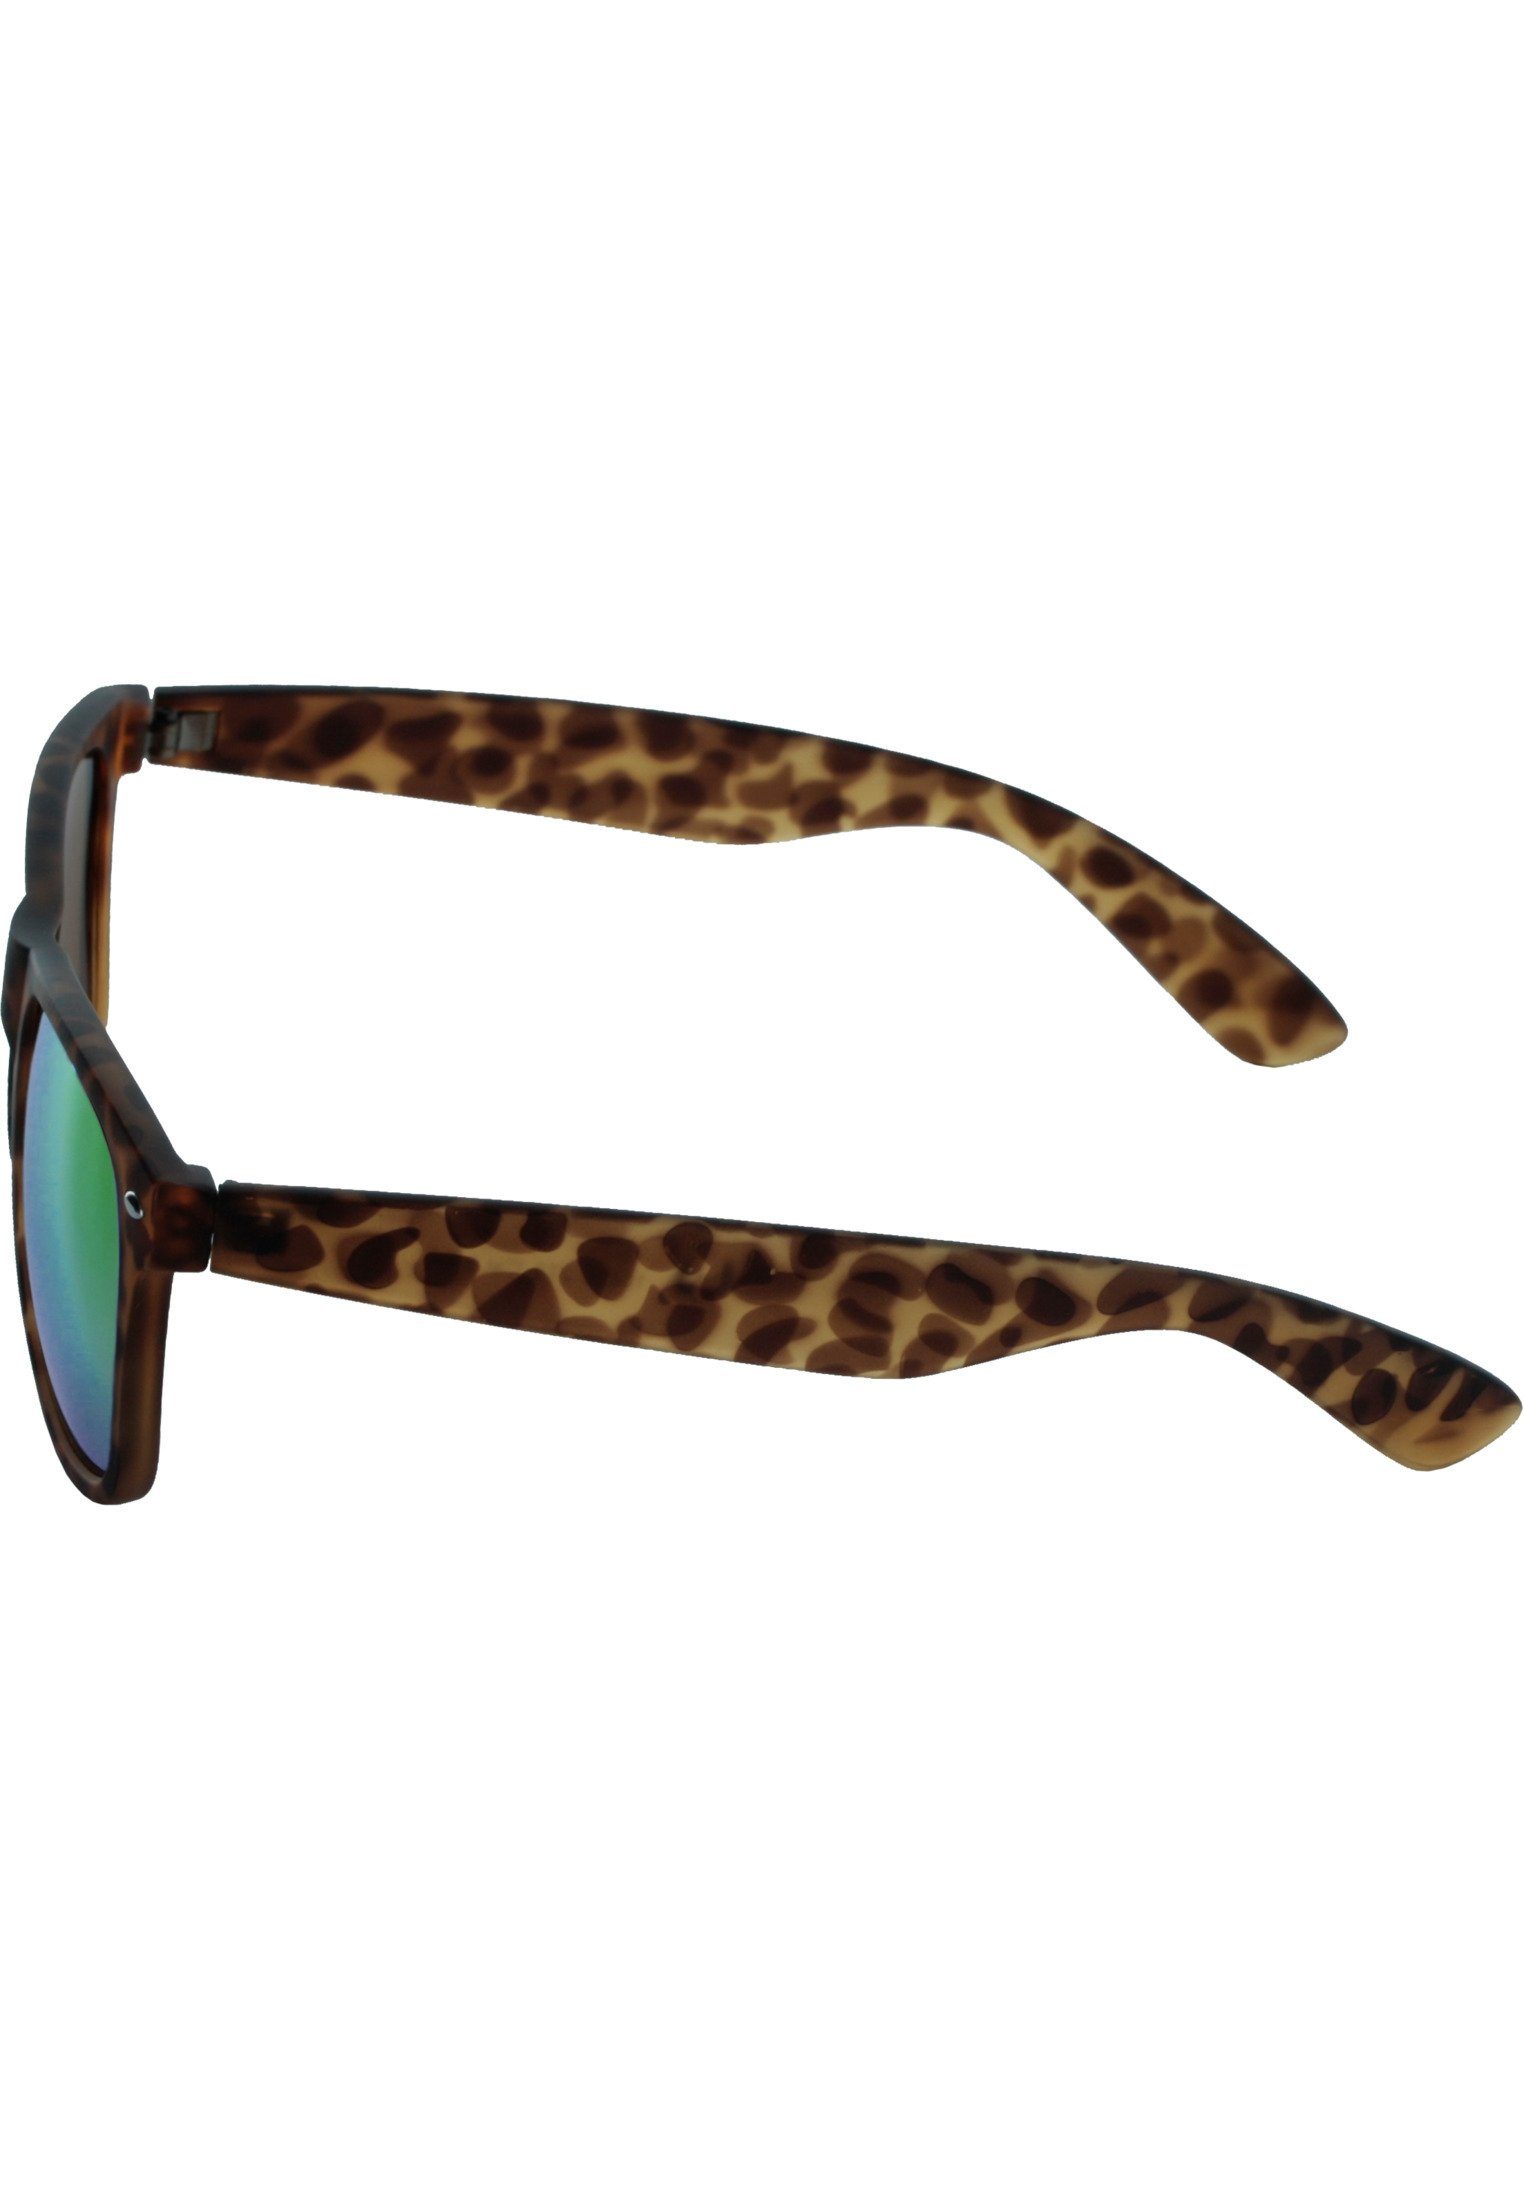 MSTRDS Sonnenbrille Accessoires Mirror amber/blue Sunglasses Likoma